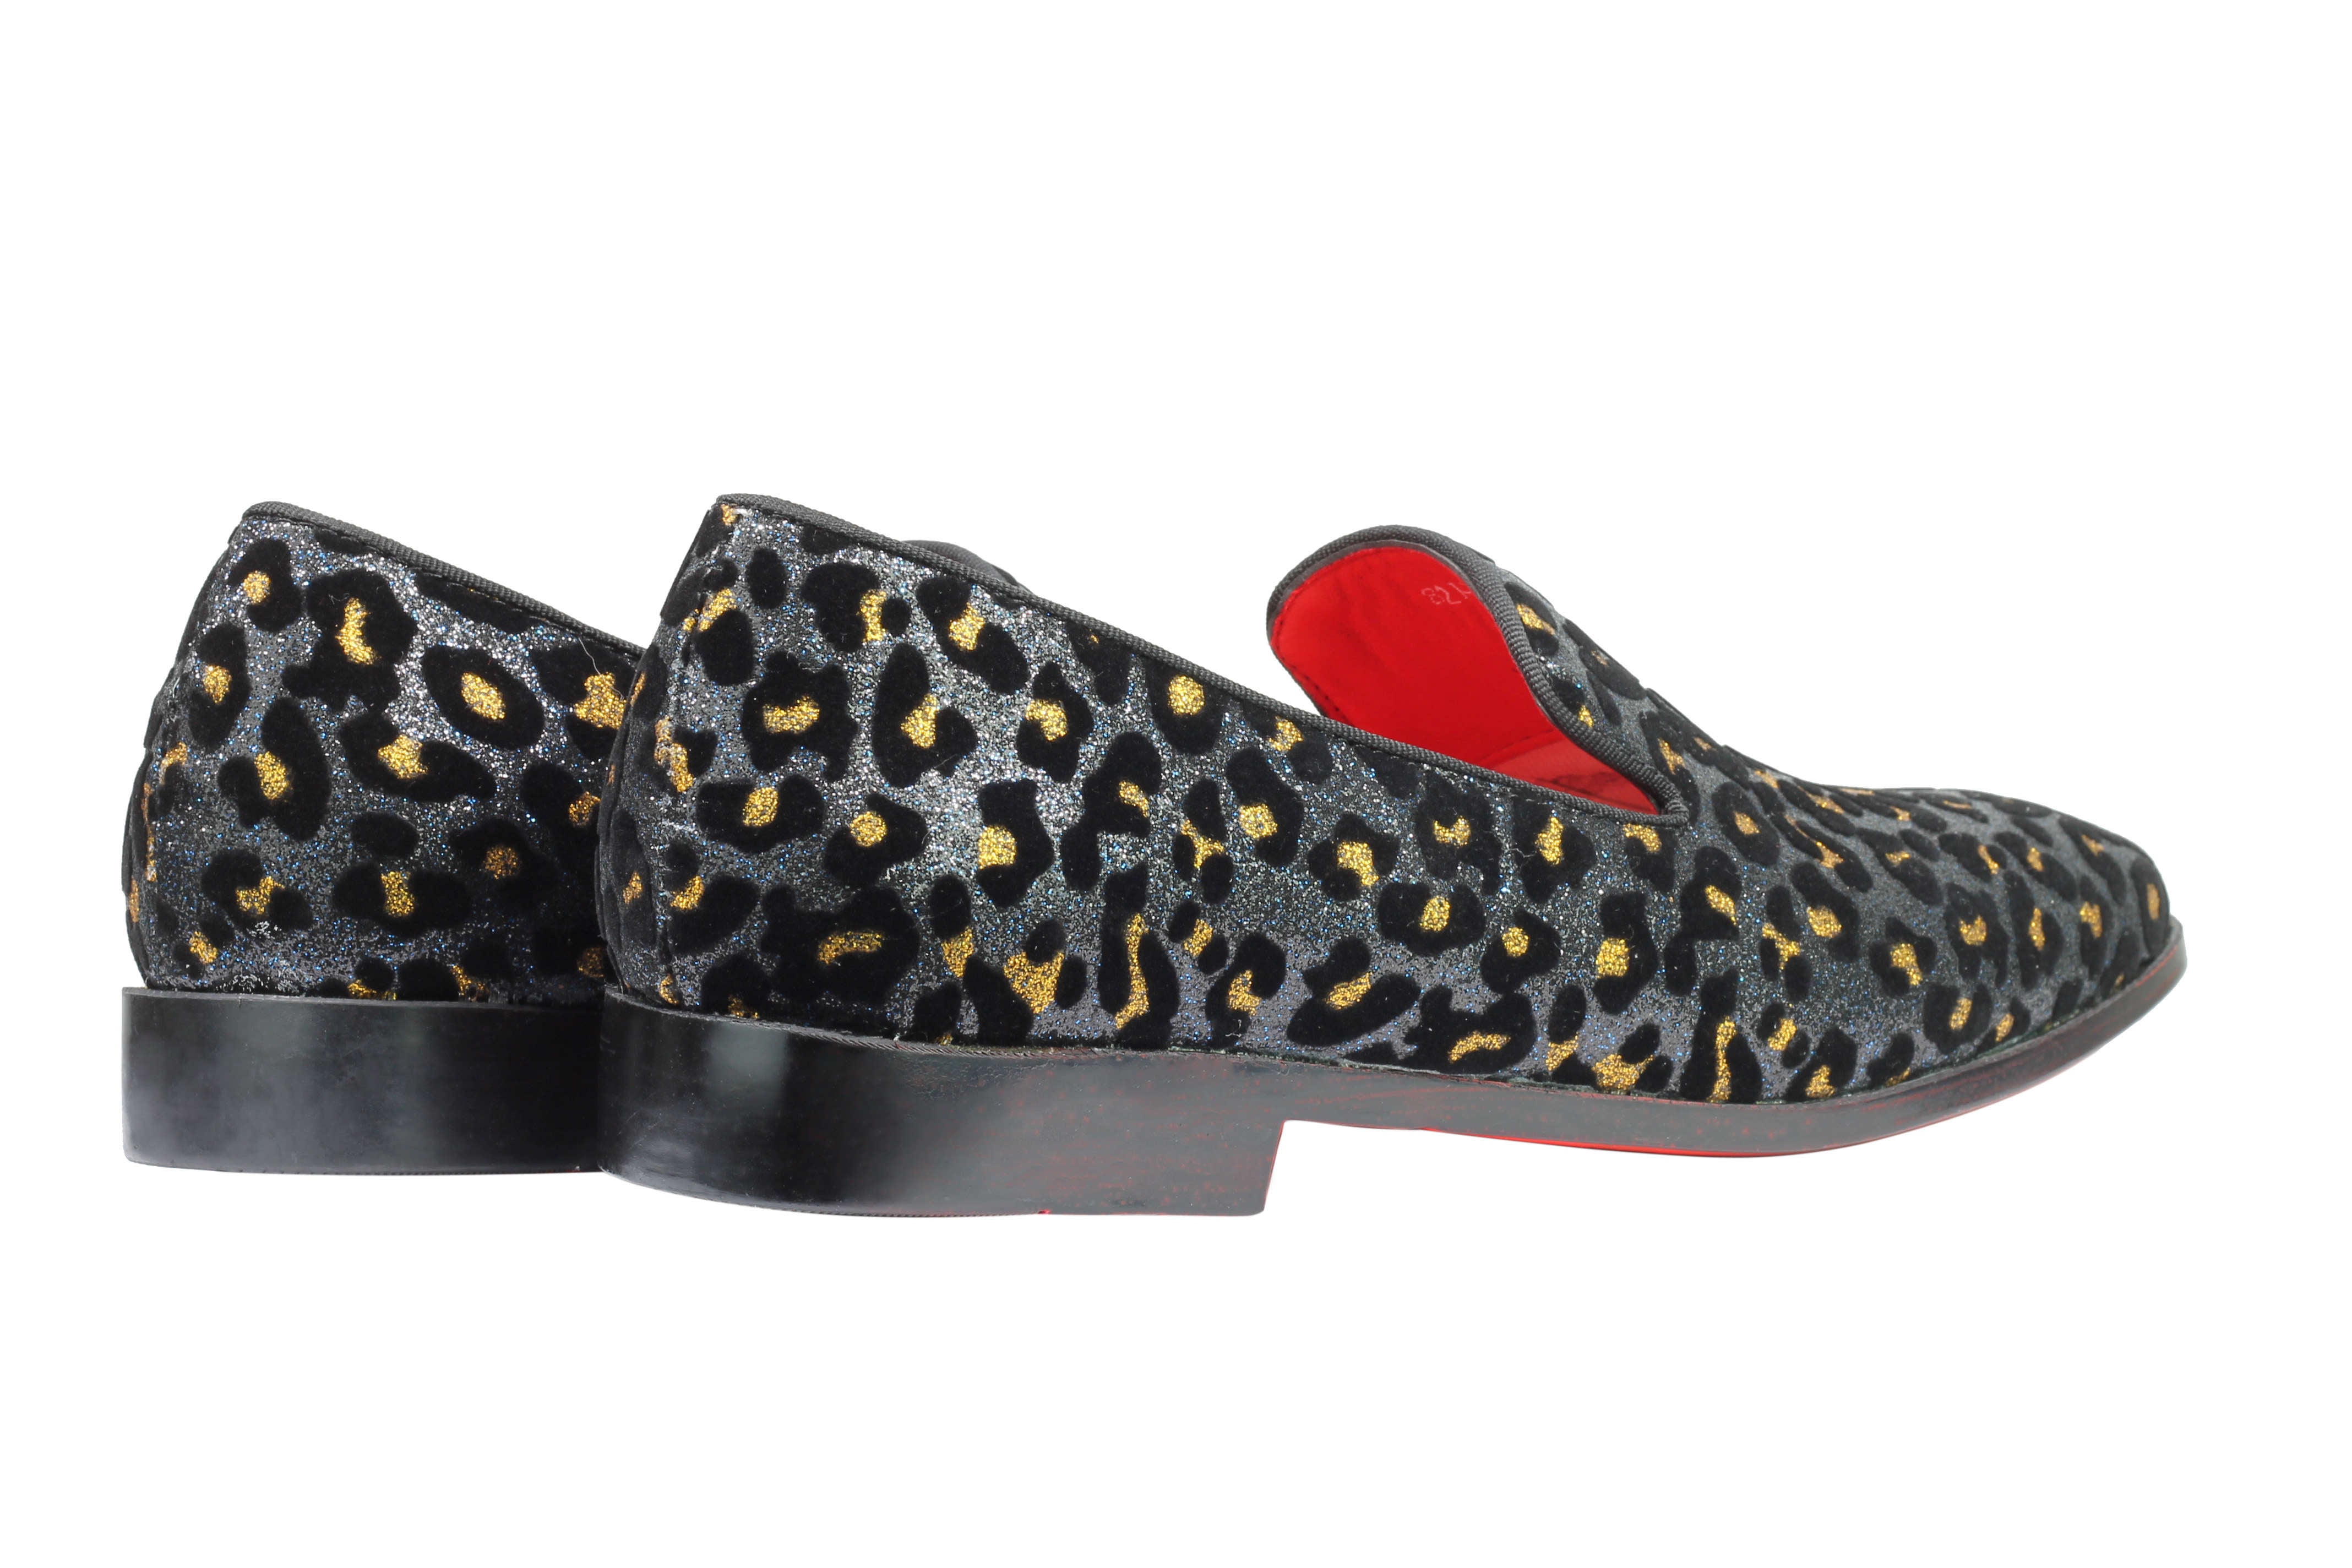 Mens Leopard Print Shoes Blue Black Gold Glitter Slip On Smoking Dress Loafers